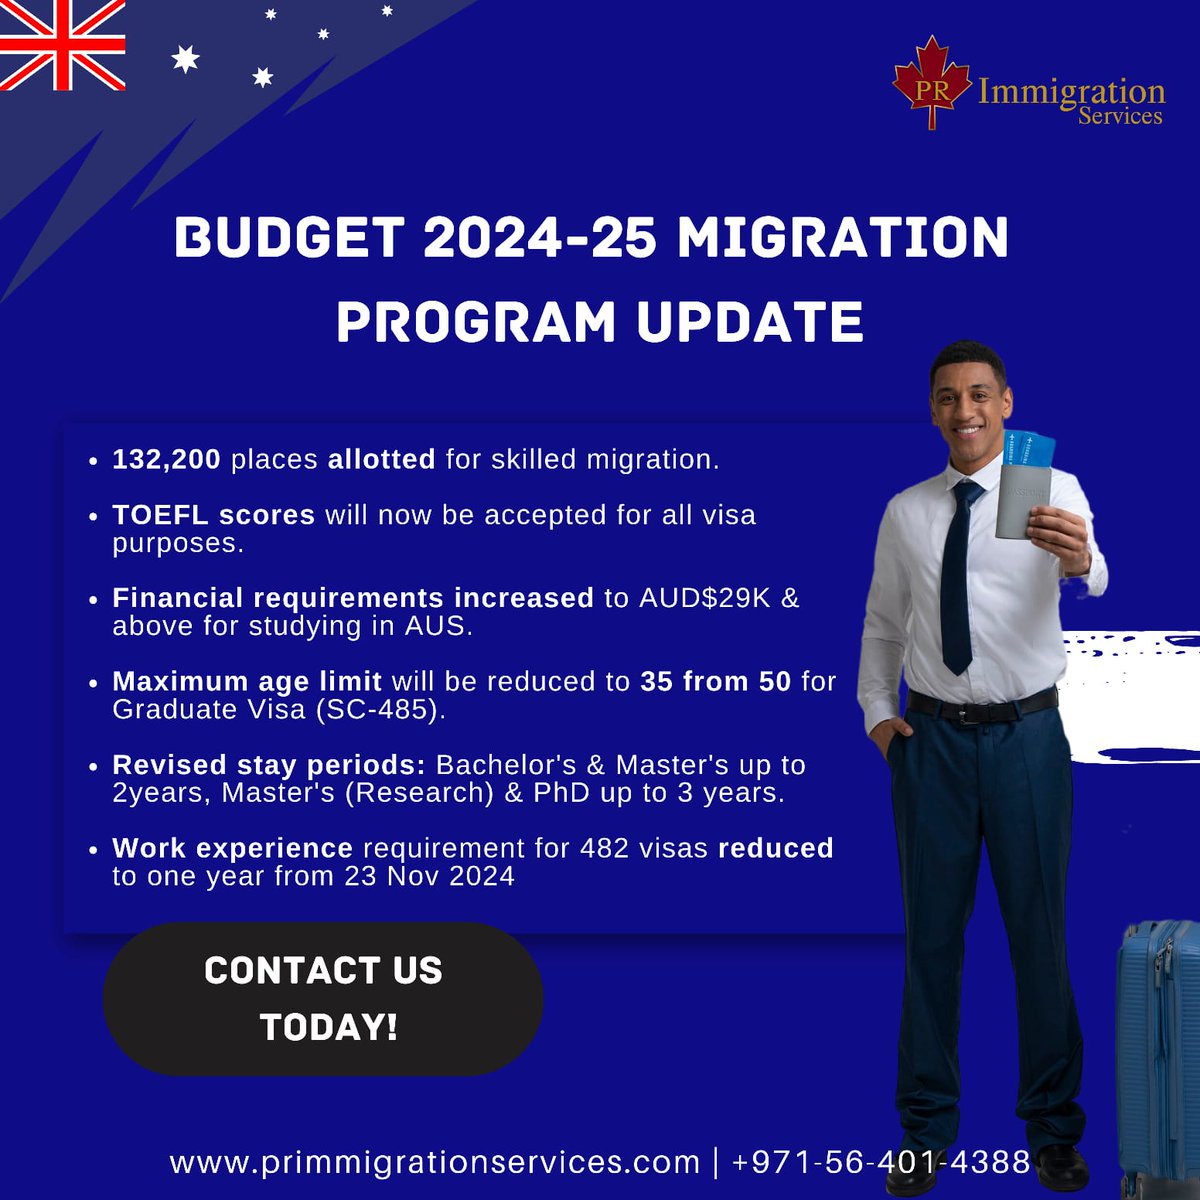 Budget 2024-25 Migration Program Update
For enquiries: +971- 564014388 (Dubai), +1(548)888-8663 (Canada)
inquiry@primmigrationservices.com
primmigrationservices.com
#AustraliaMigration #StudyInAustralia #SkilledMigration #GraduateVisa #TOEFL #MigrationUpdate #PRImmigrationServices